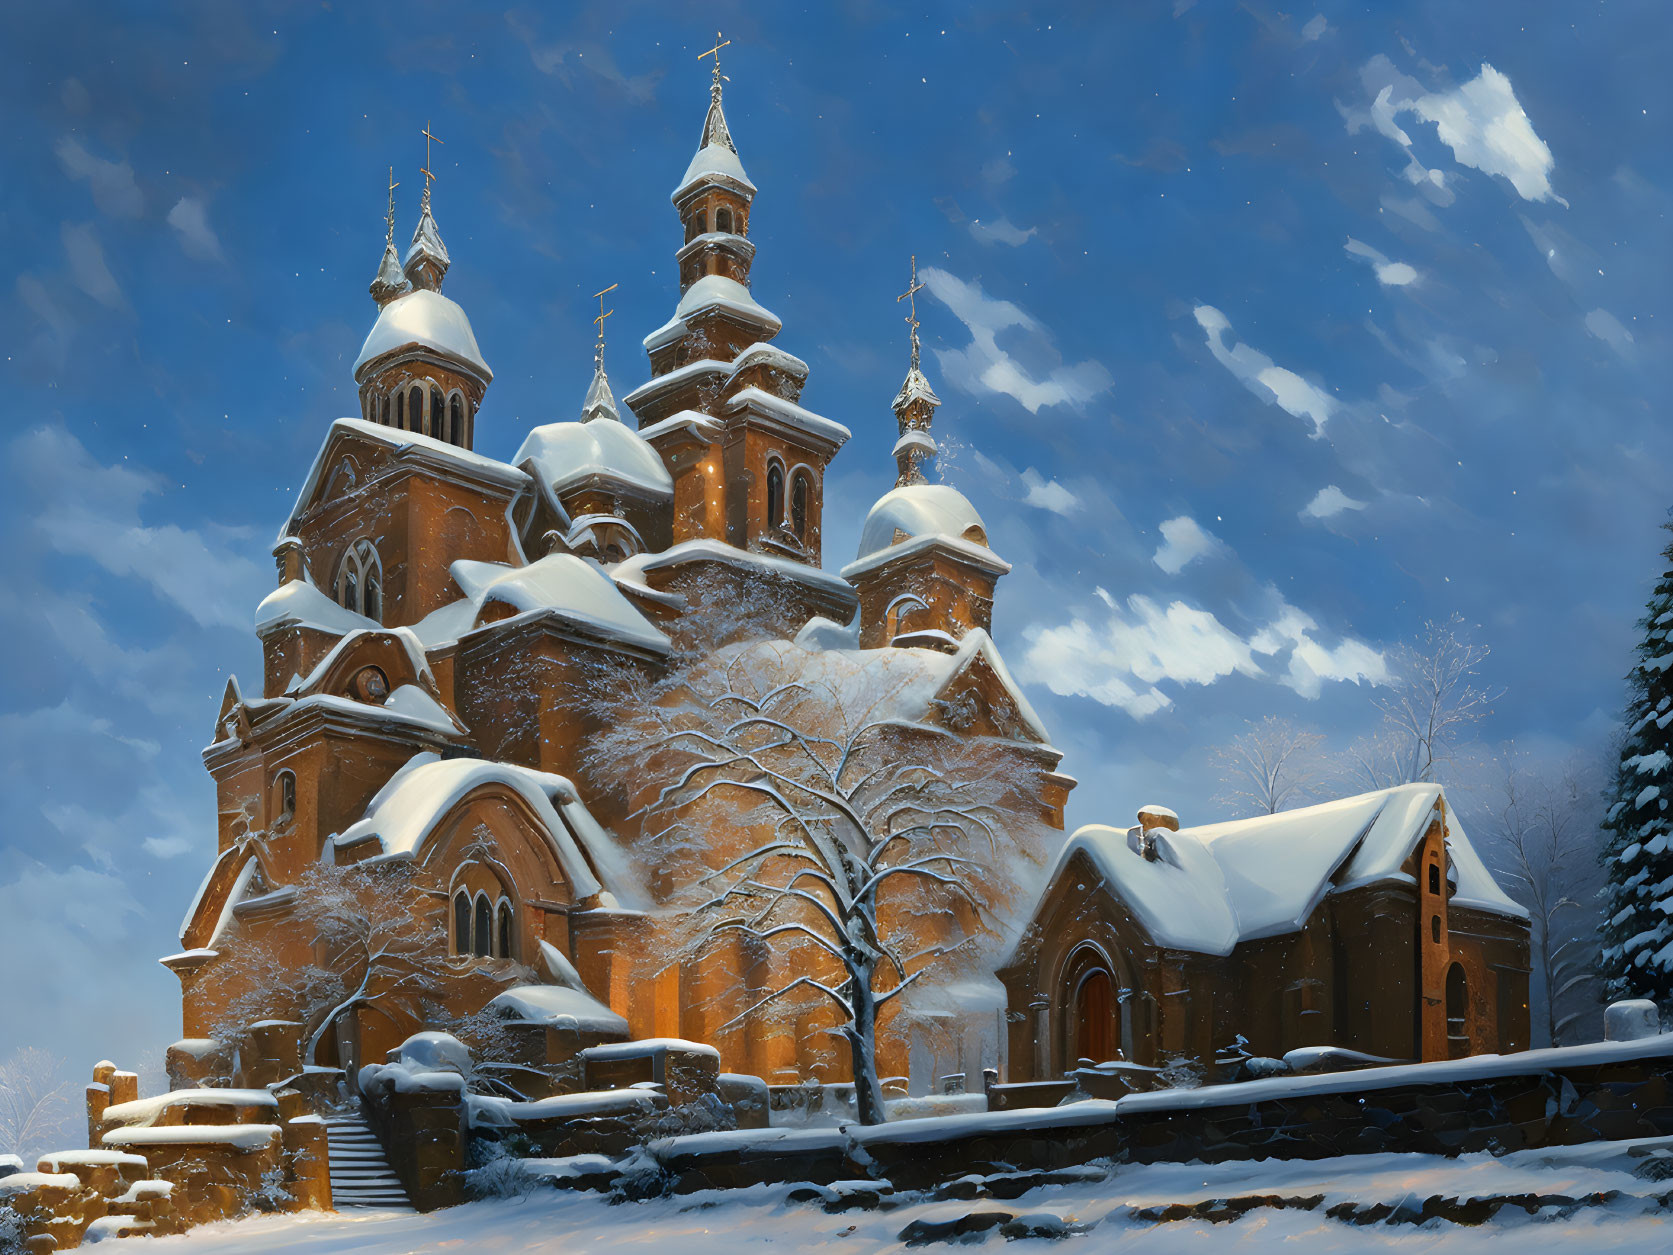 Winter church